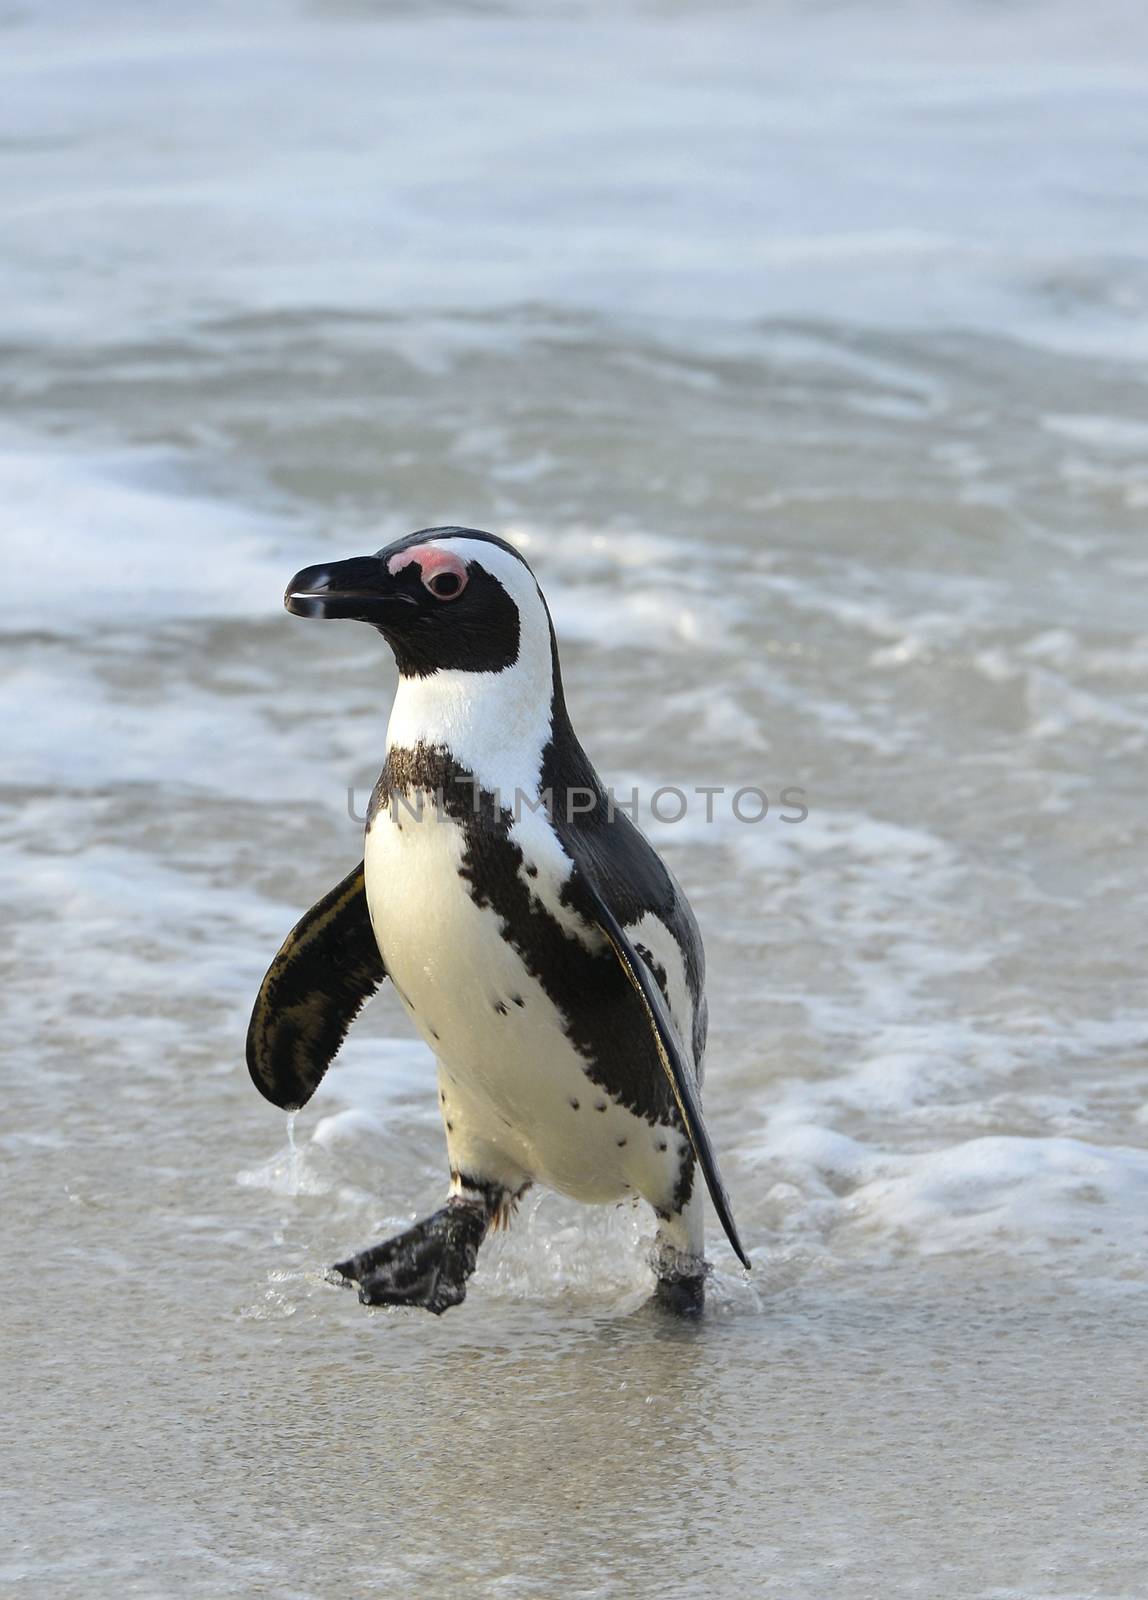 African penguin by SURZ